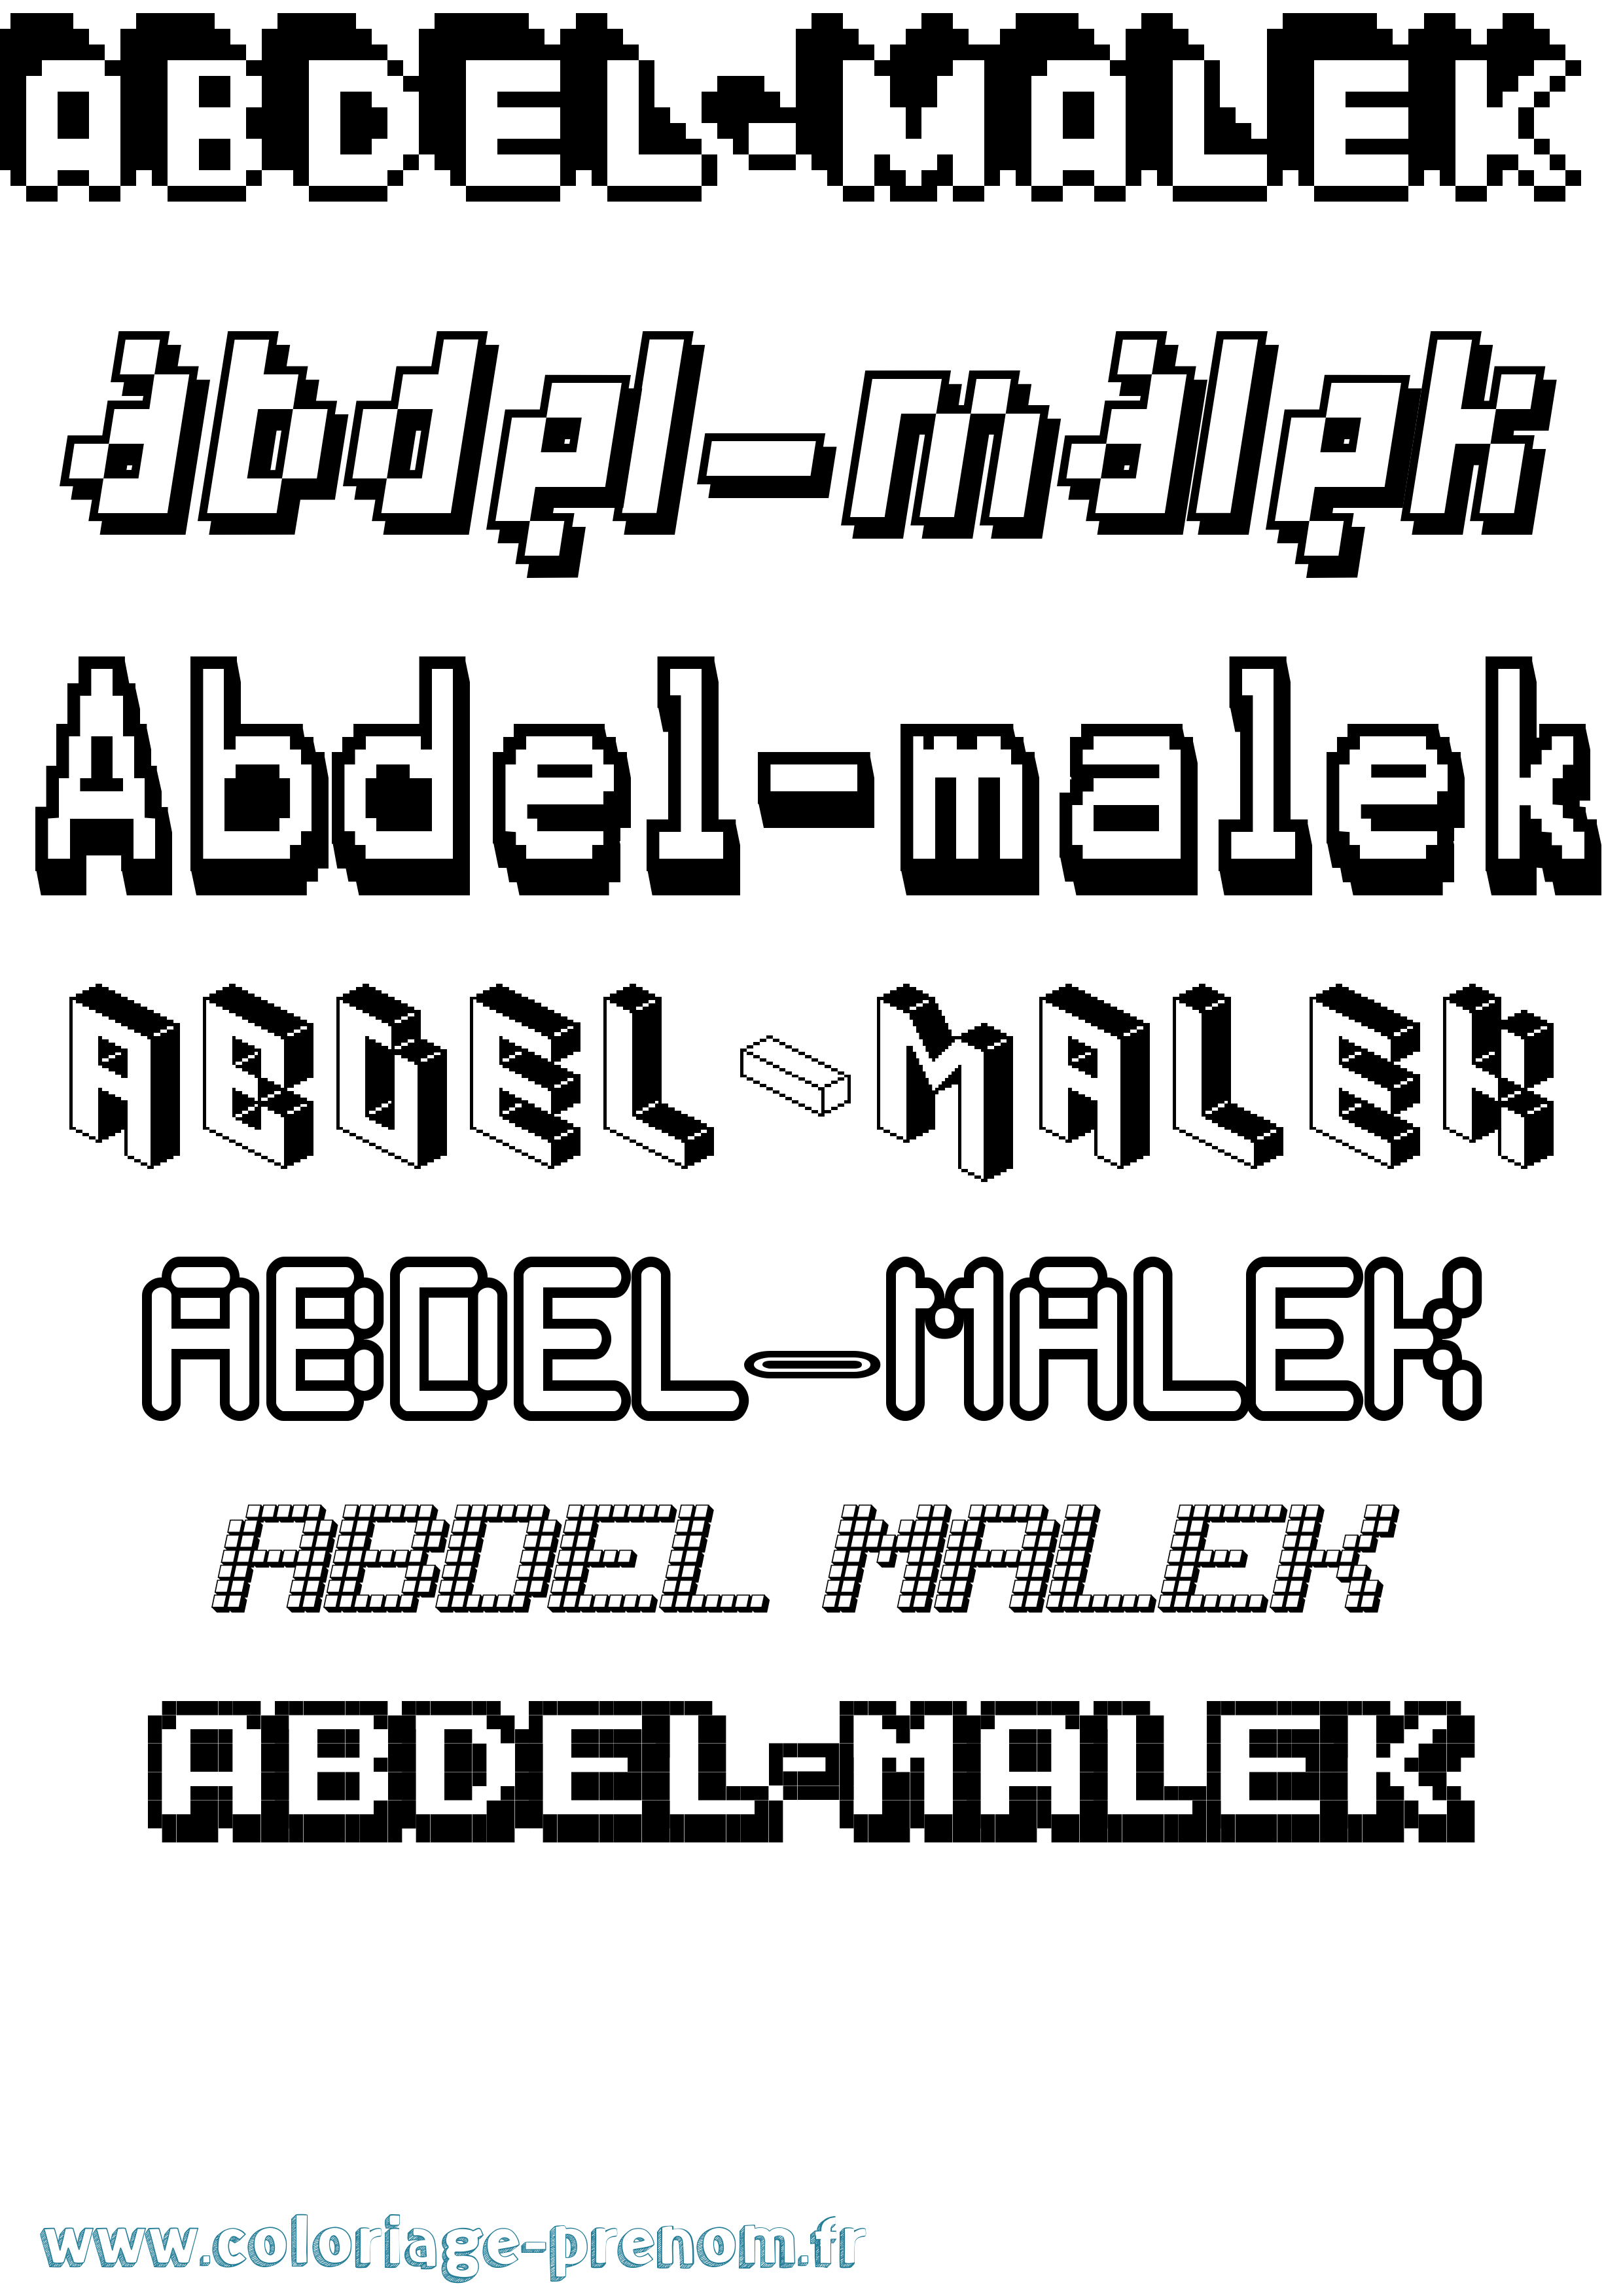 Coloriage prénom Abdel-Malek Pixel